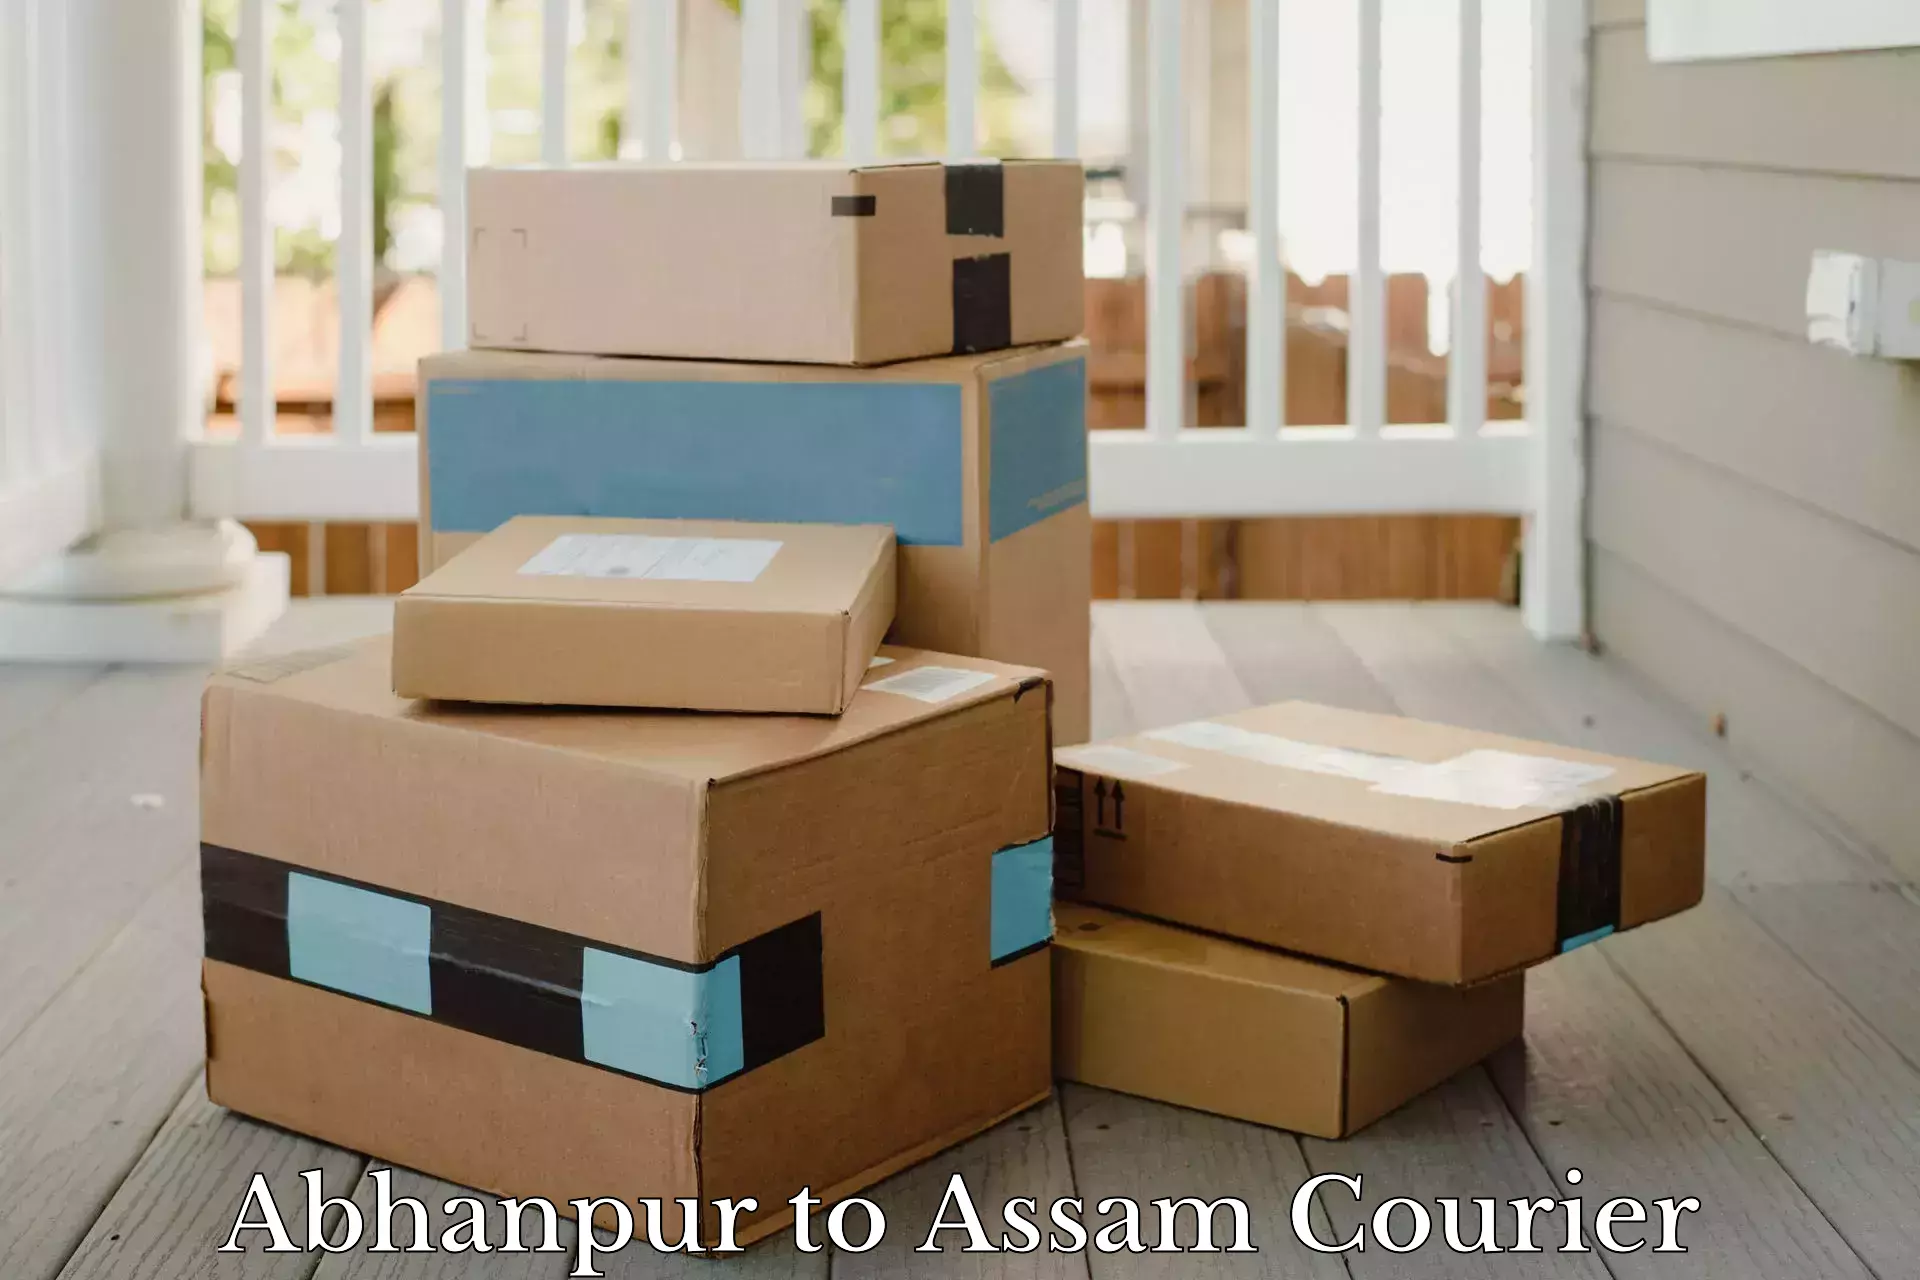 Courier service comparison Abhanpur to Assam